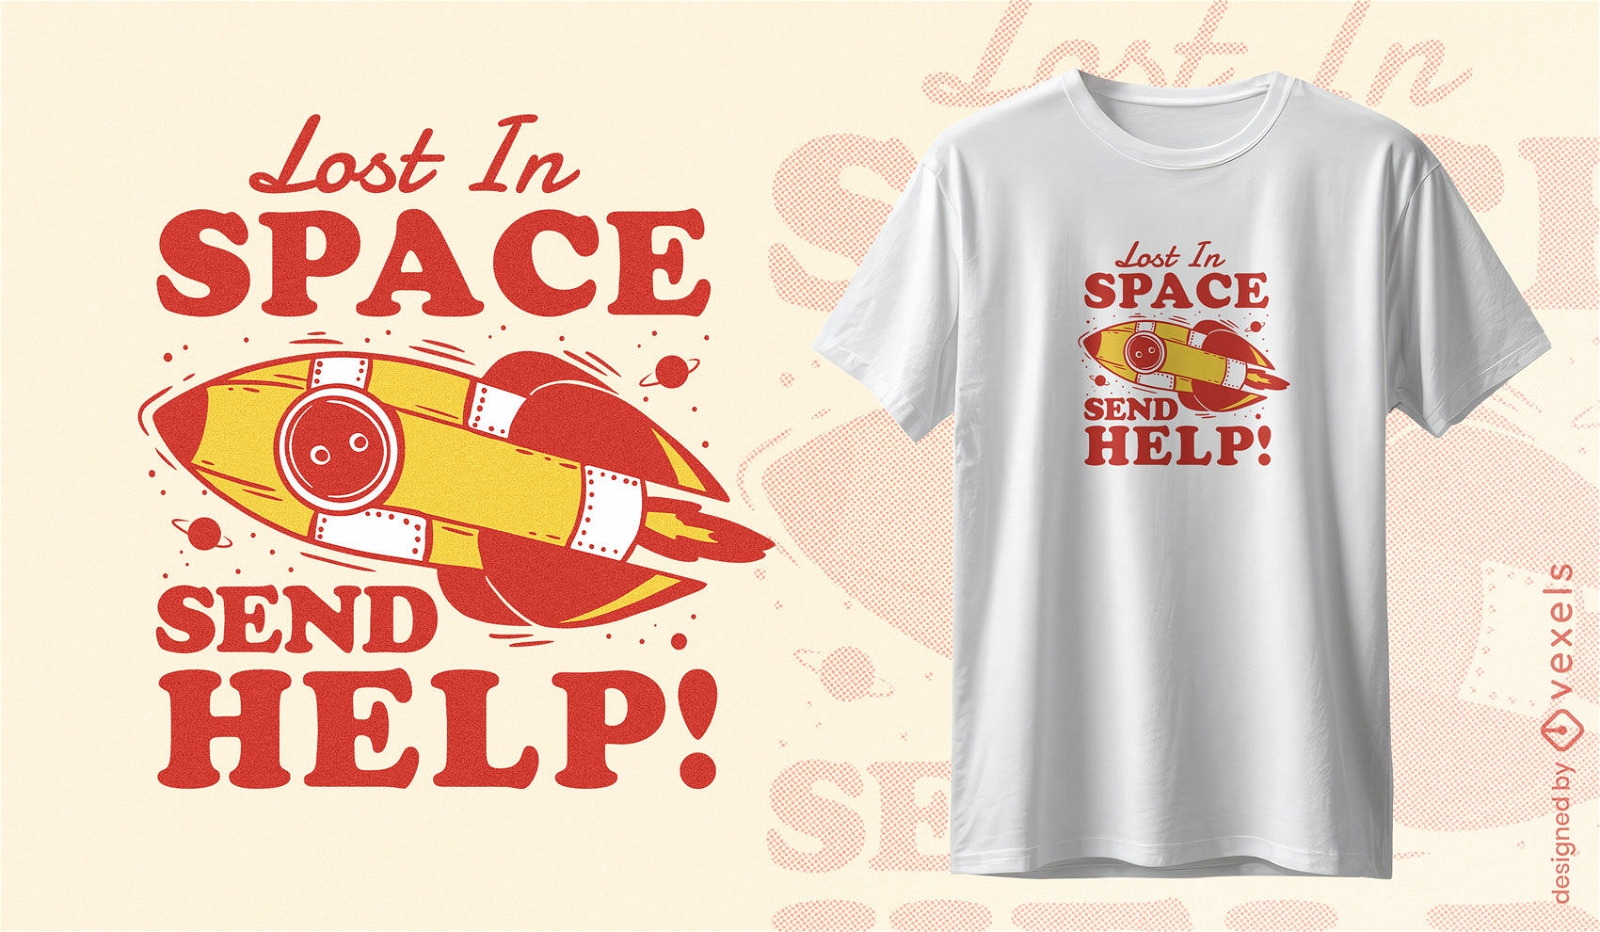 Diseño de camiseta de cohete espacial perdido.